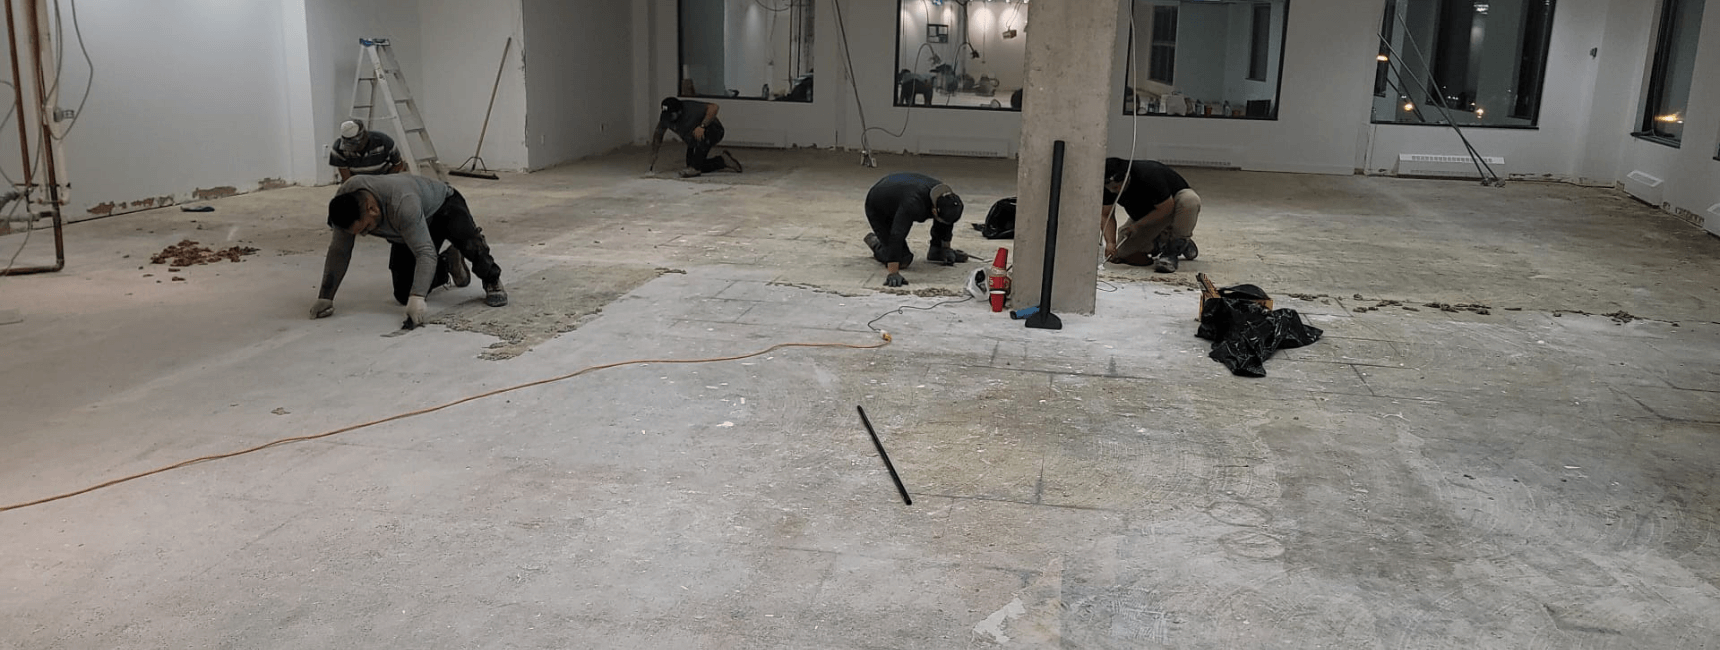 floor removal and demolition services toronto gta